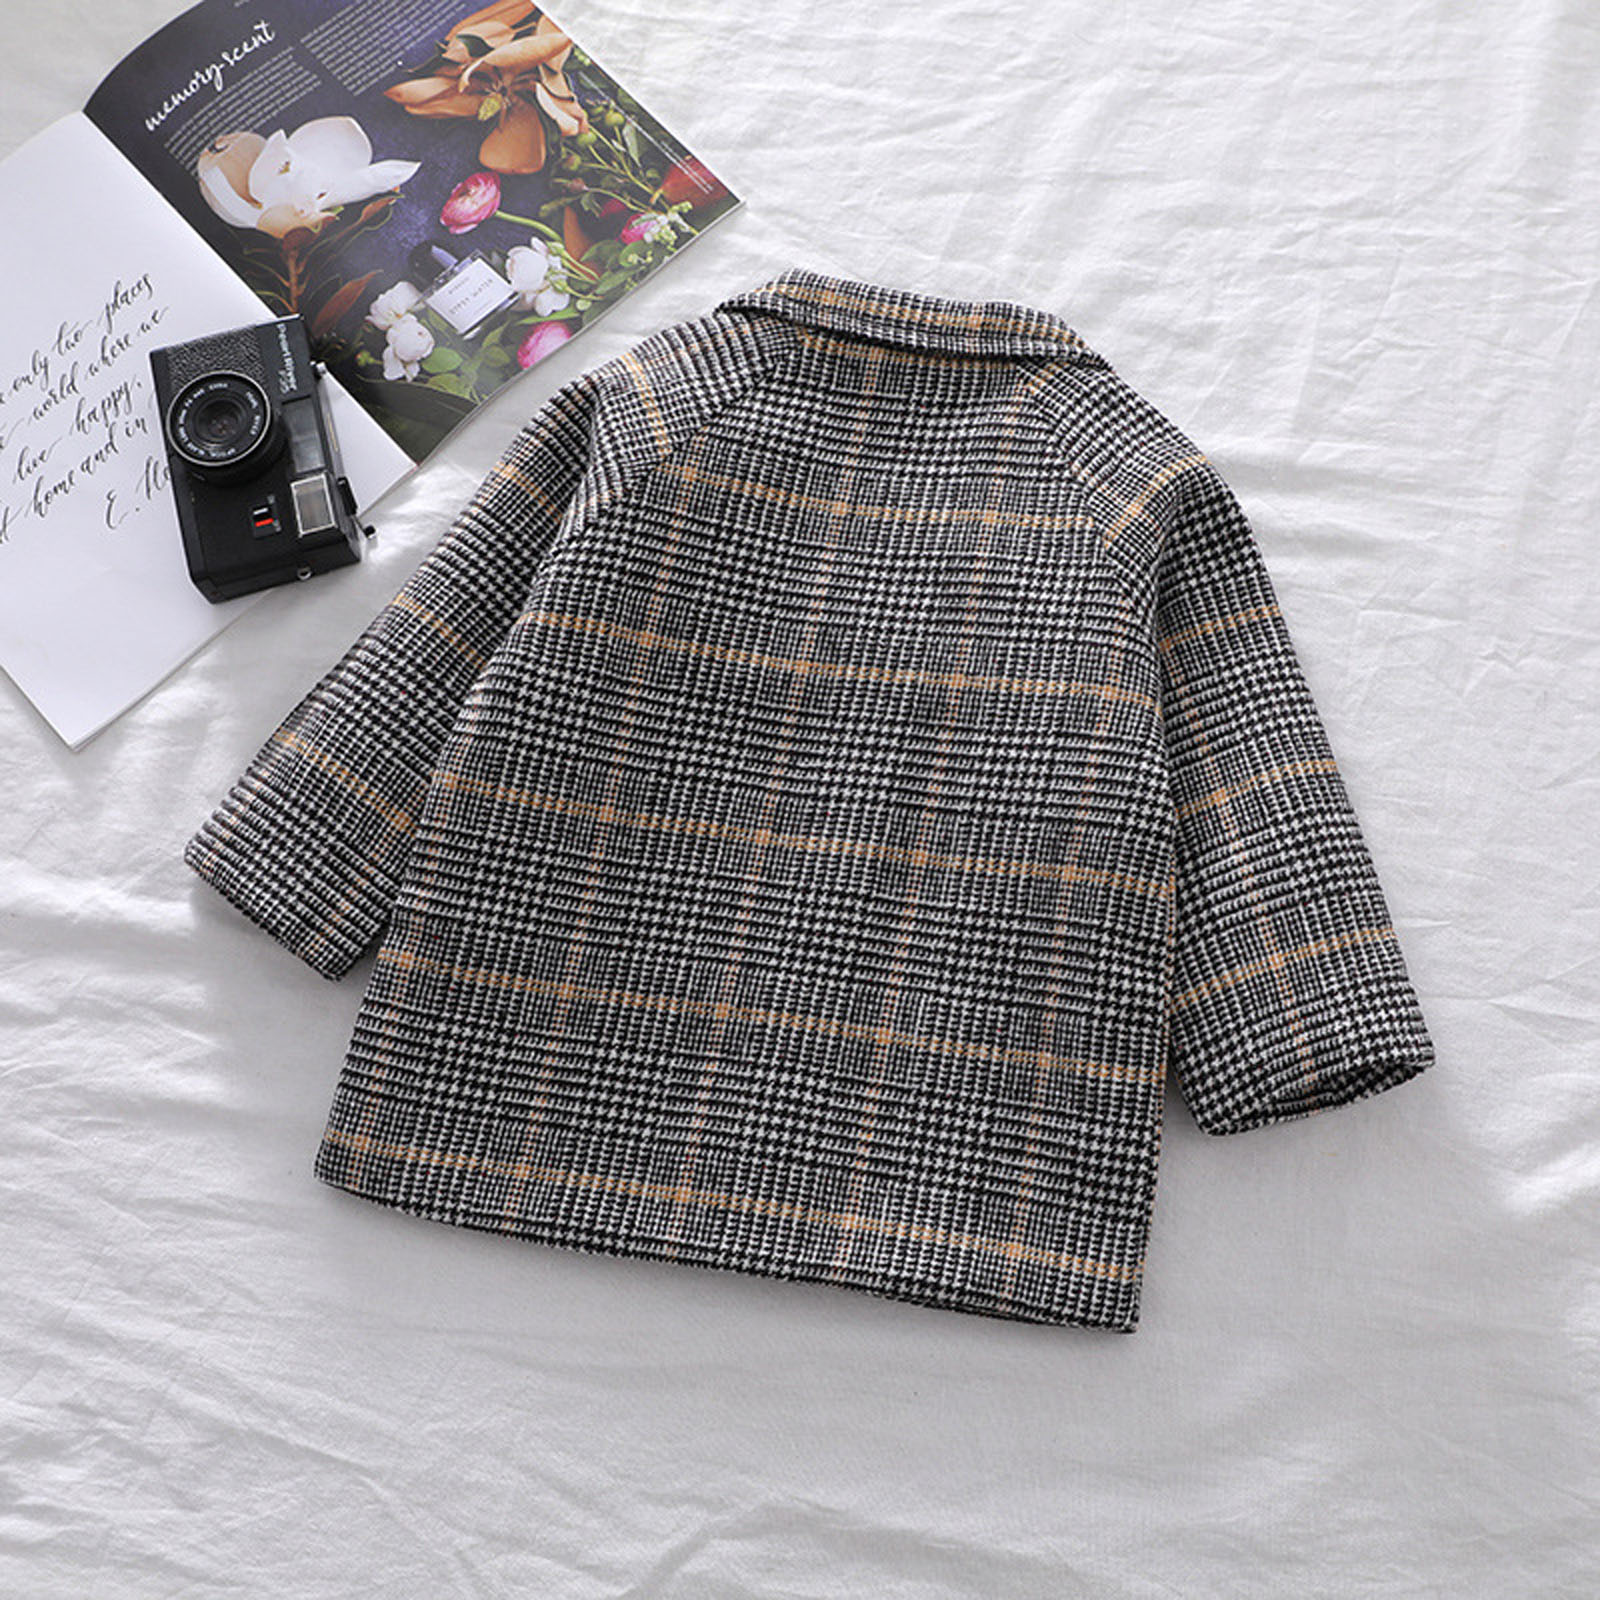 Meihuid Baby Boys Girls Wool Coat Winter Warm Double Breasted Trench Coat Jacket Outwear - image 2 of 6